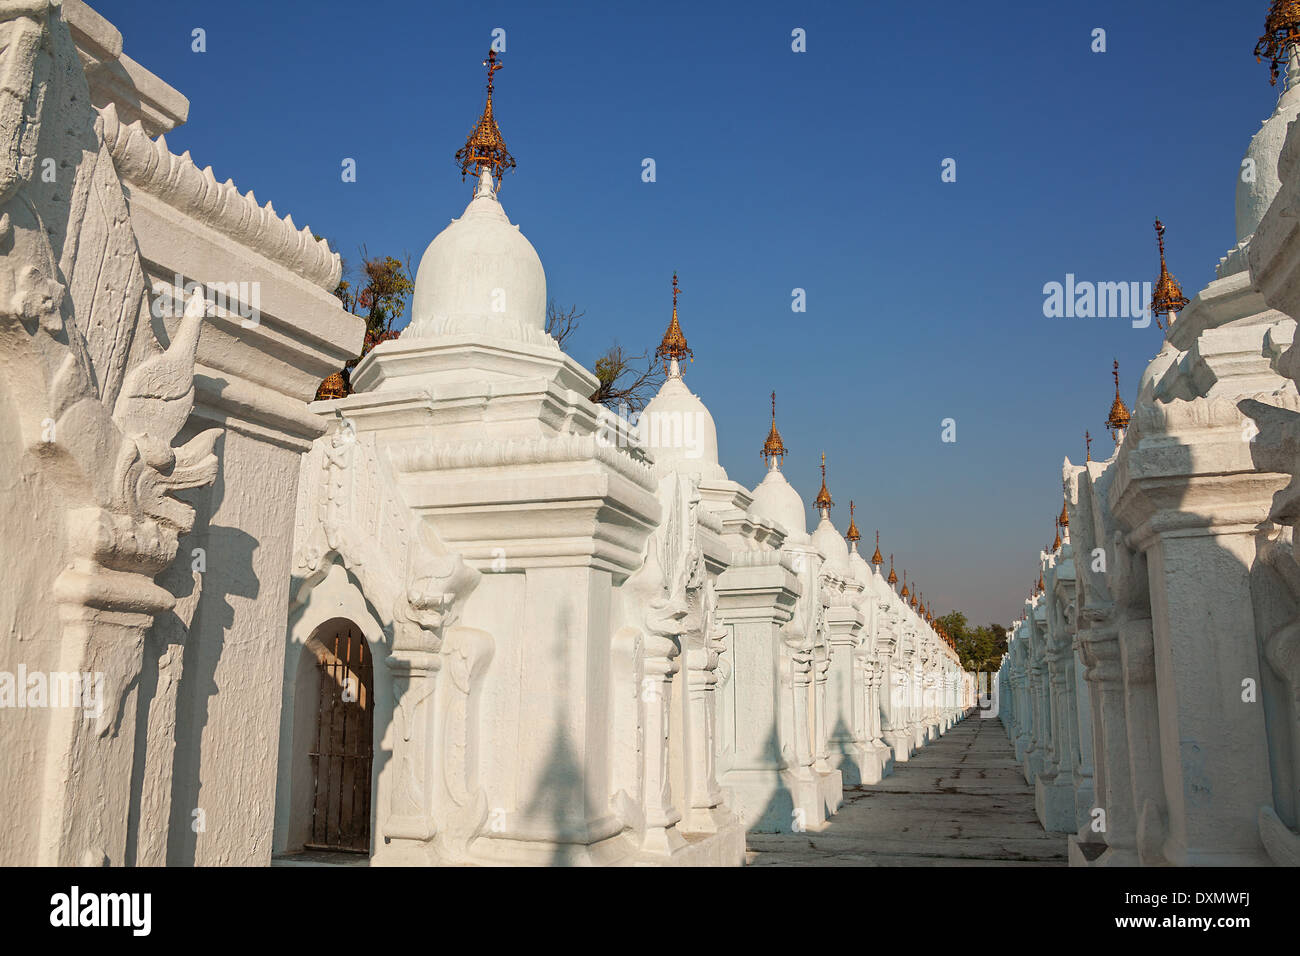 Kuthodaw Pagoda è la più grande del mondo Libro (Biblioteca di pietra). Mandalay, Myanmar. Foto Stock